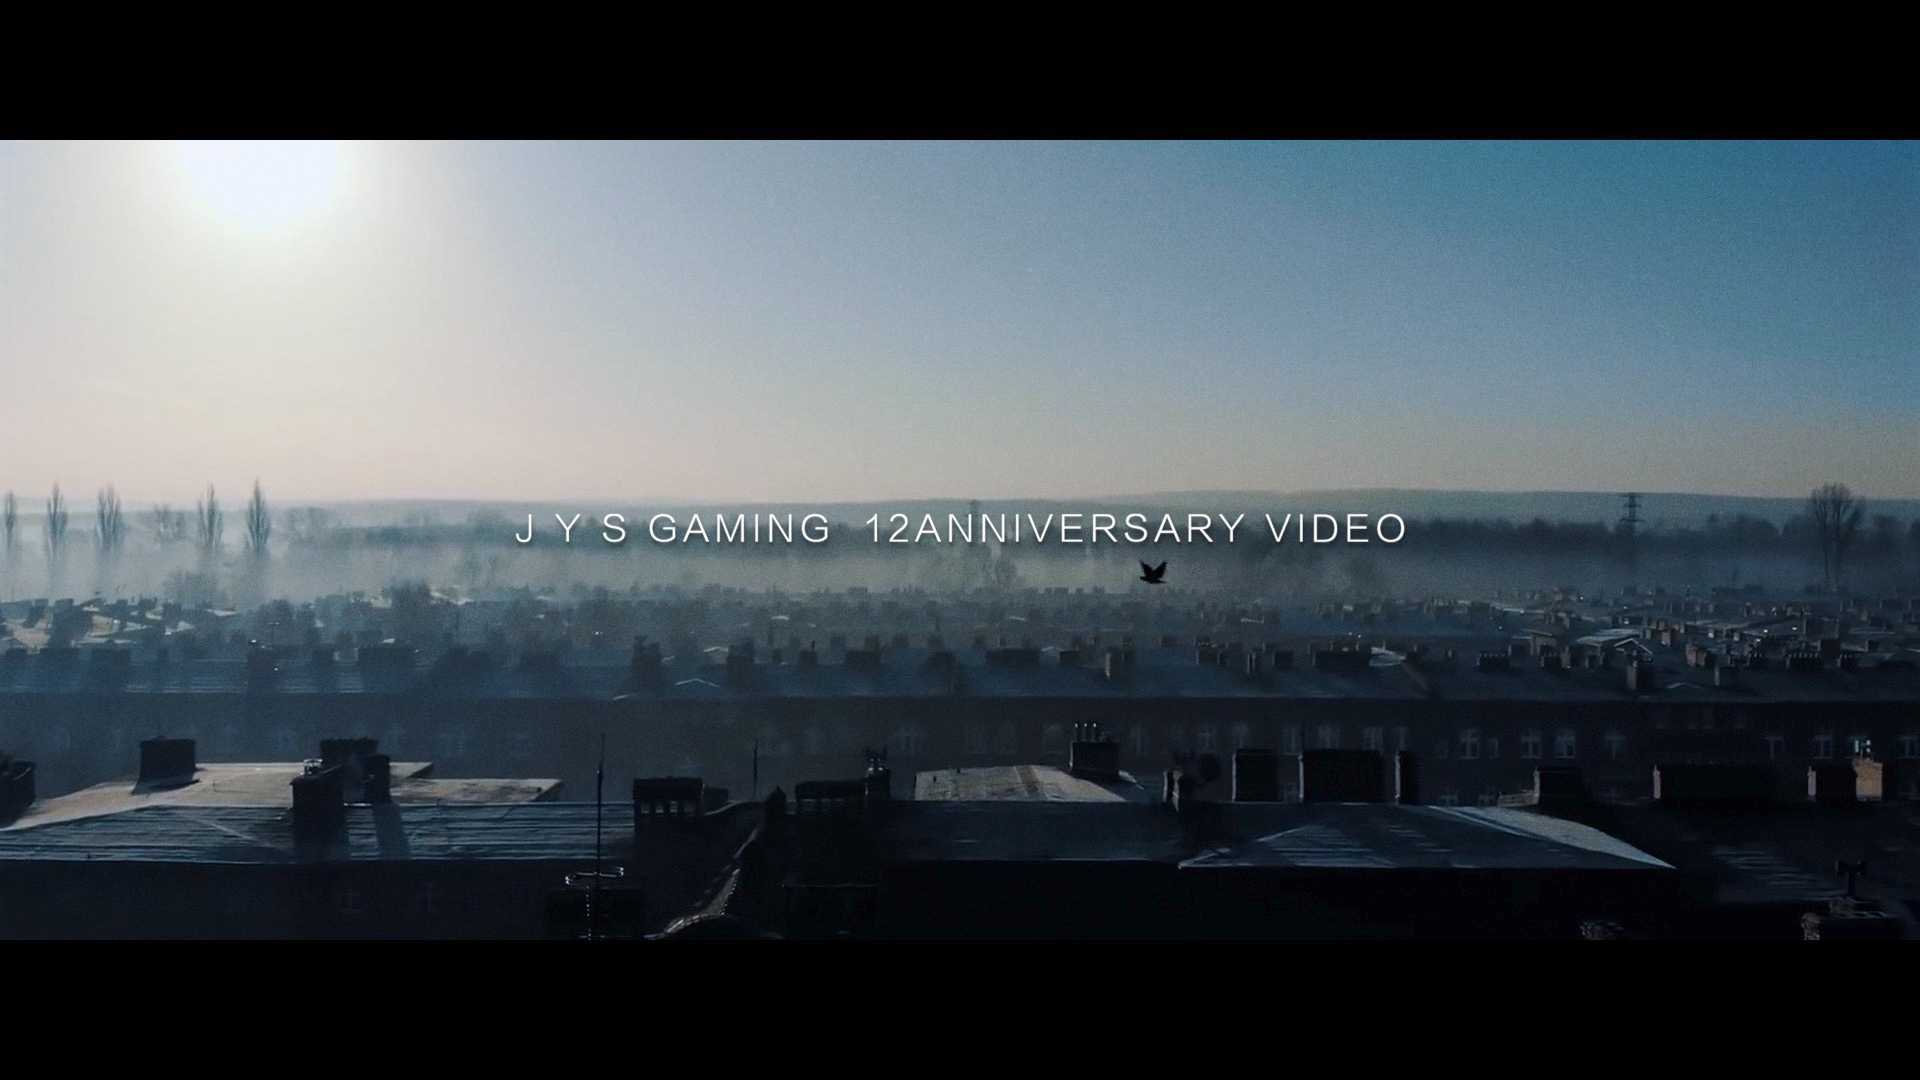 J Y S GAMING  12ANNIVERSARY VIDEO